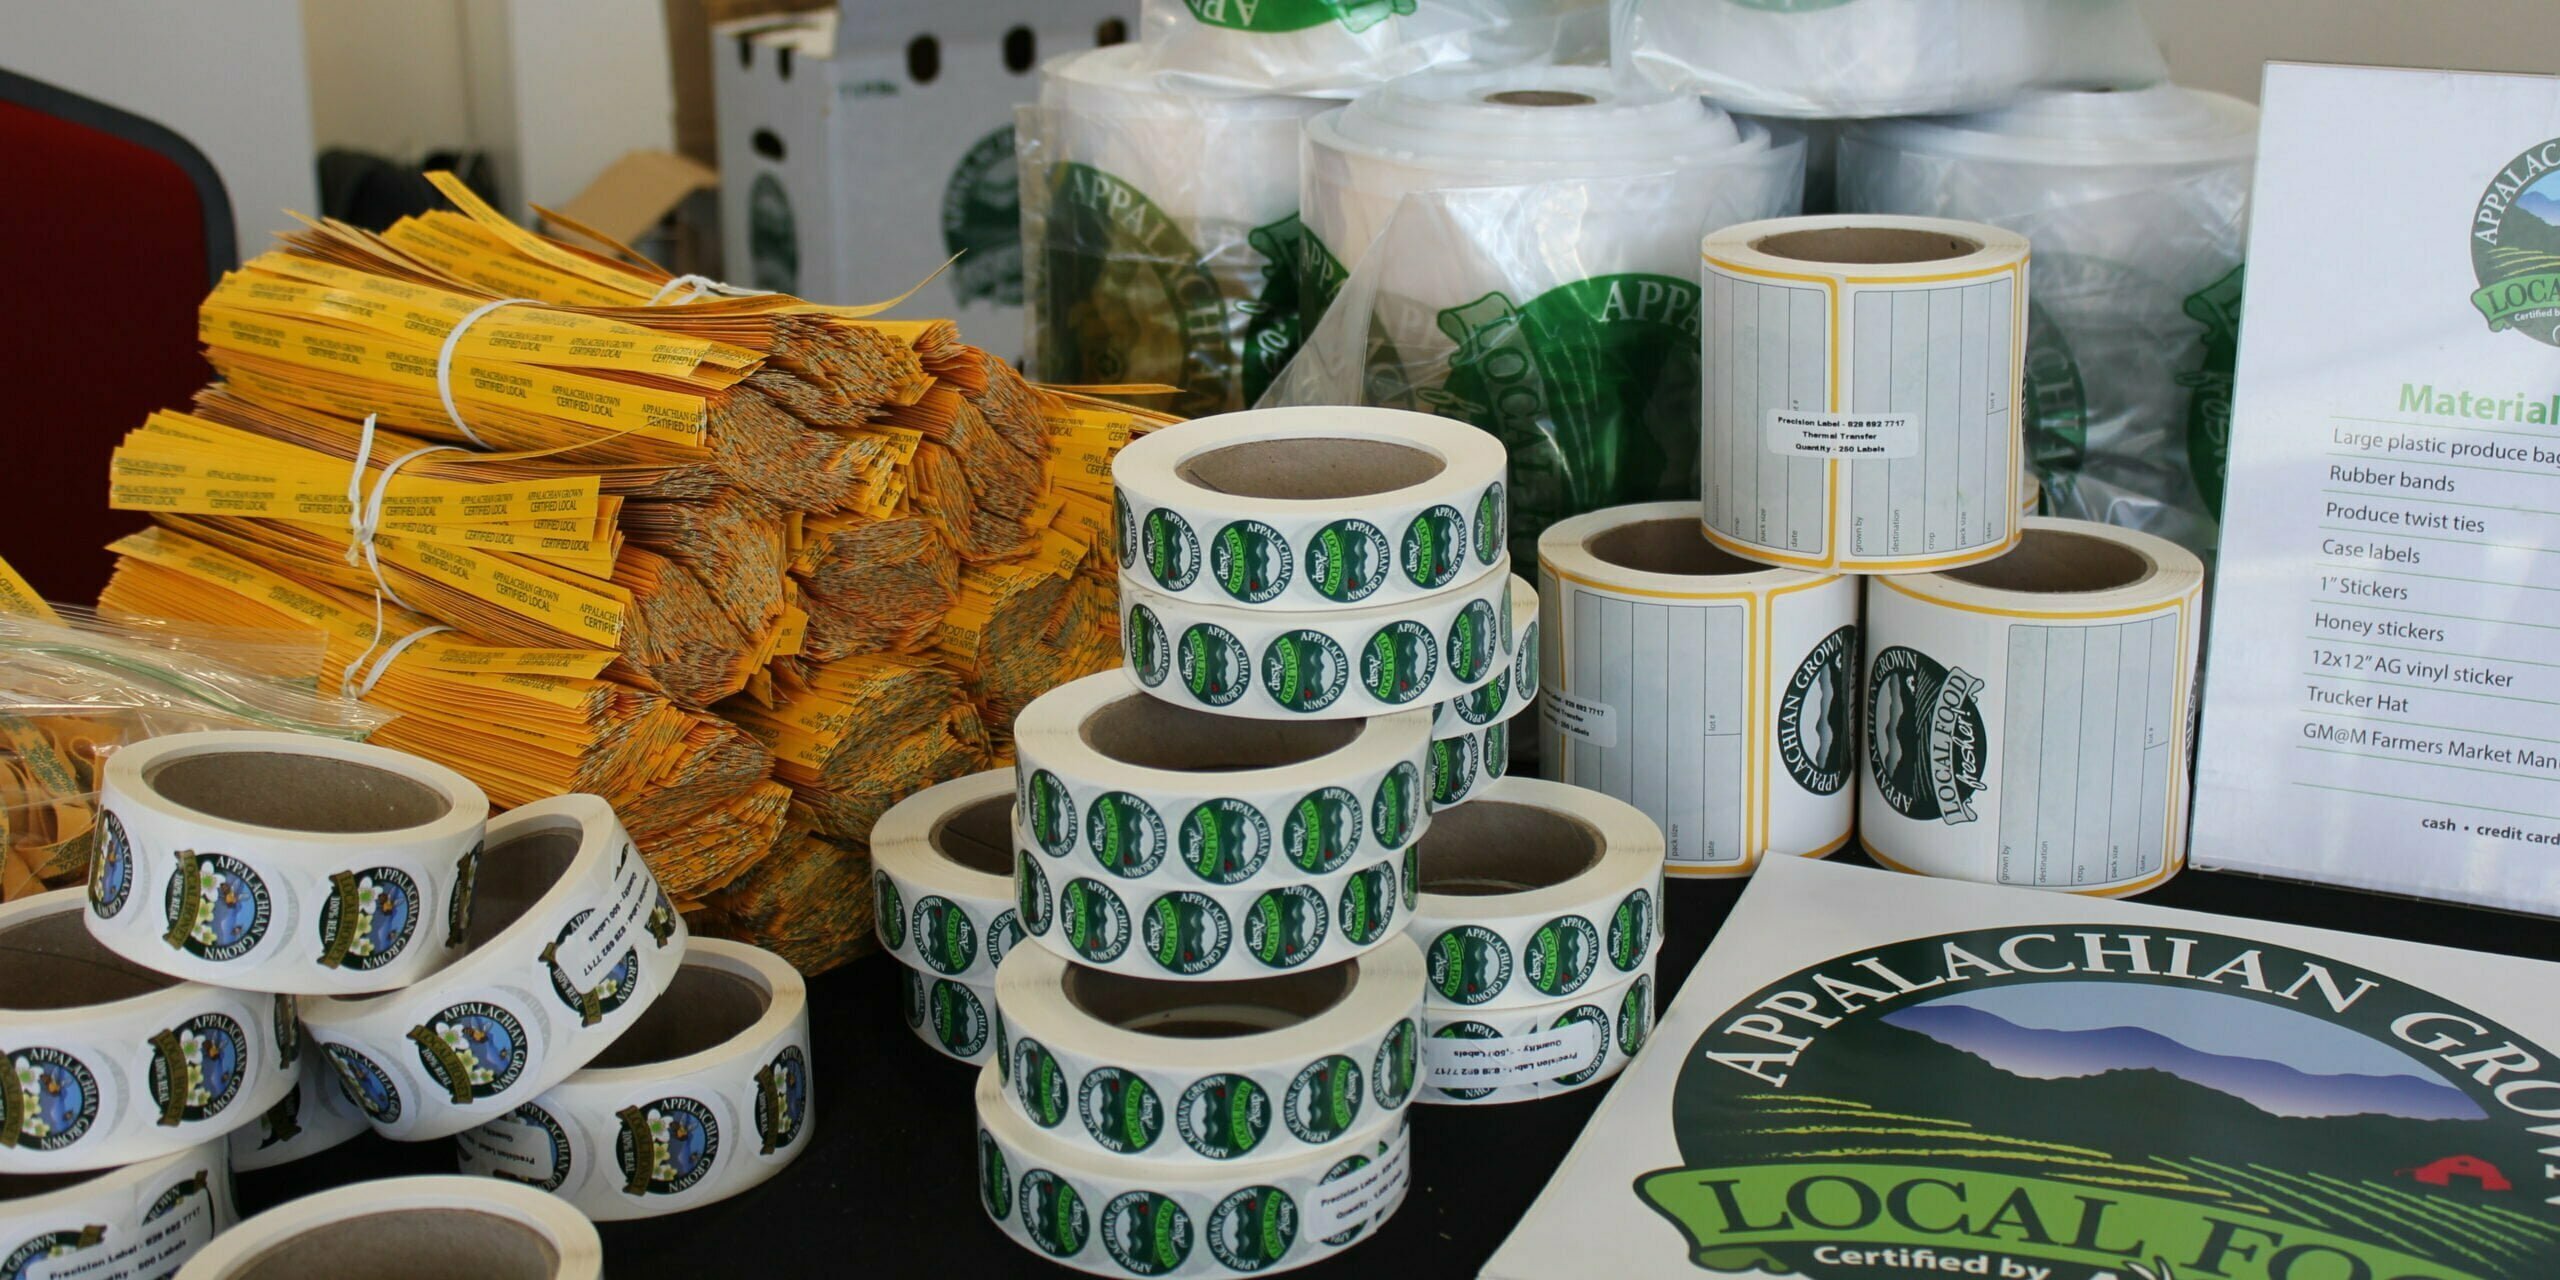 Appalachian Grown packaging and branding materials